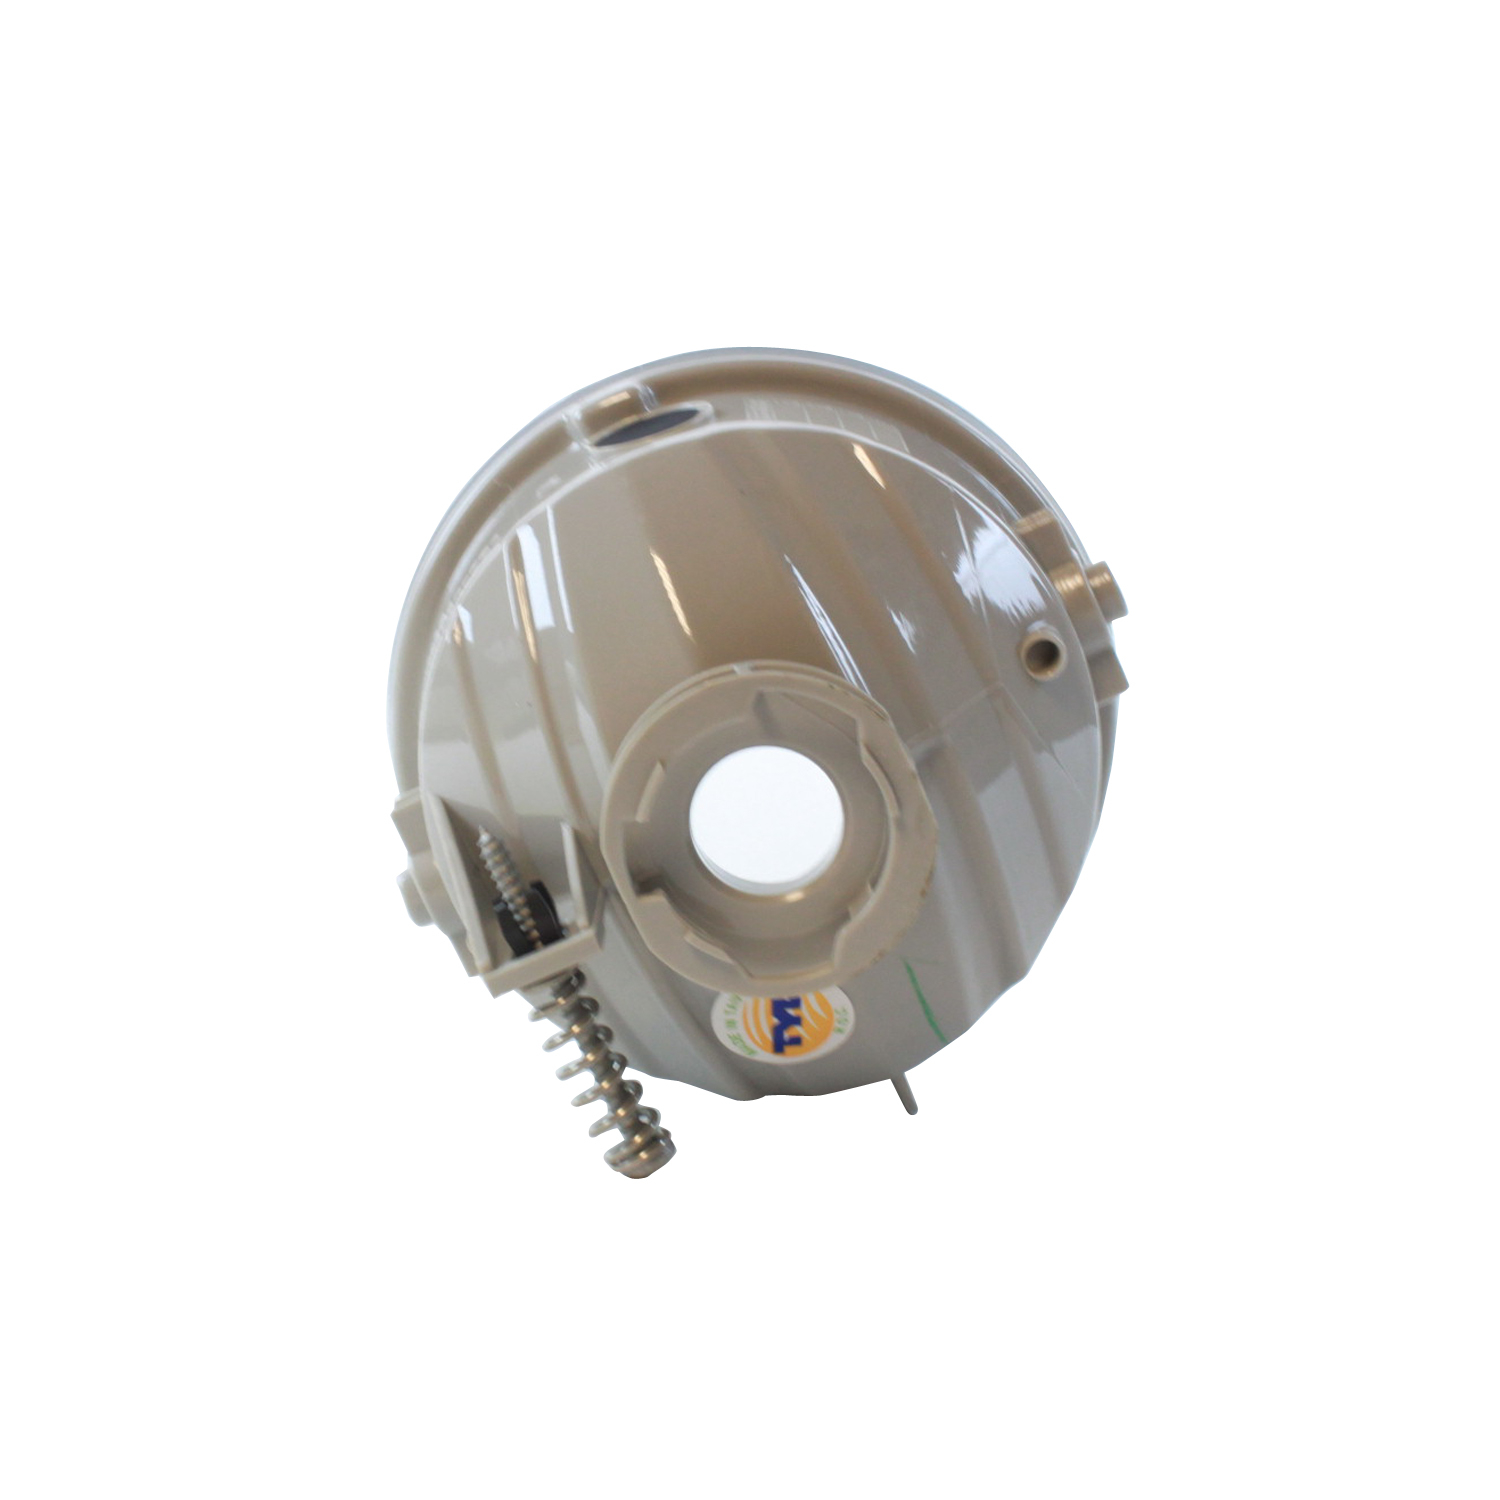 TYC - CAPA Certified Fog Light Assembly - TYC 19-5903-01-9